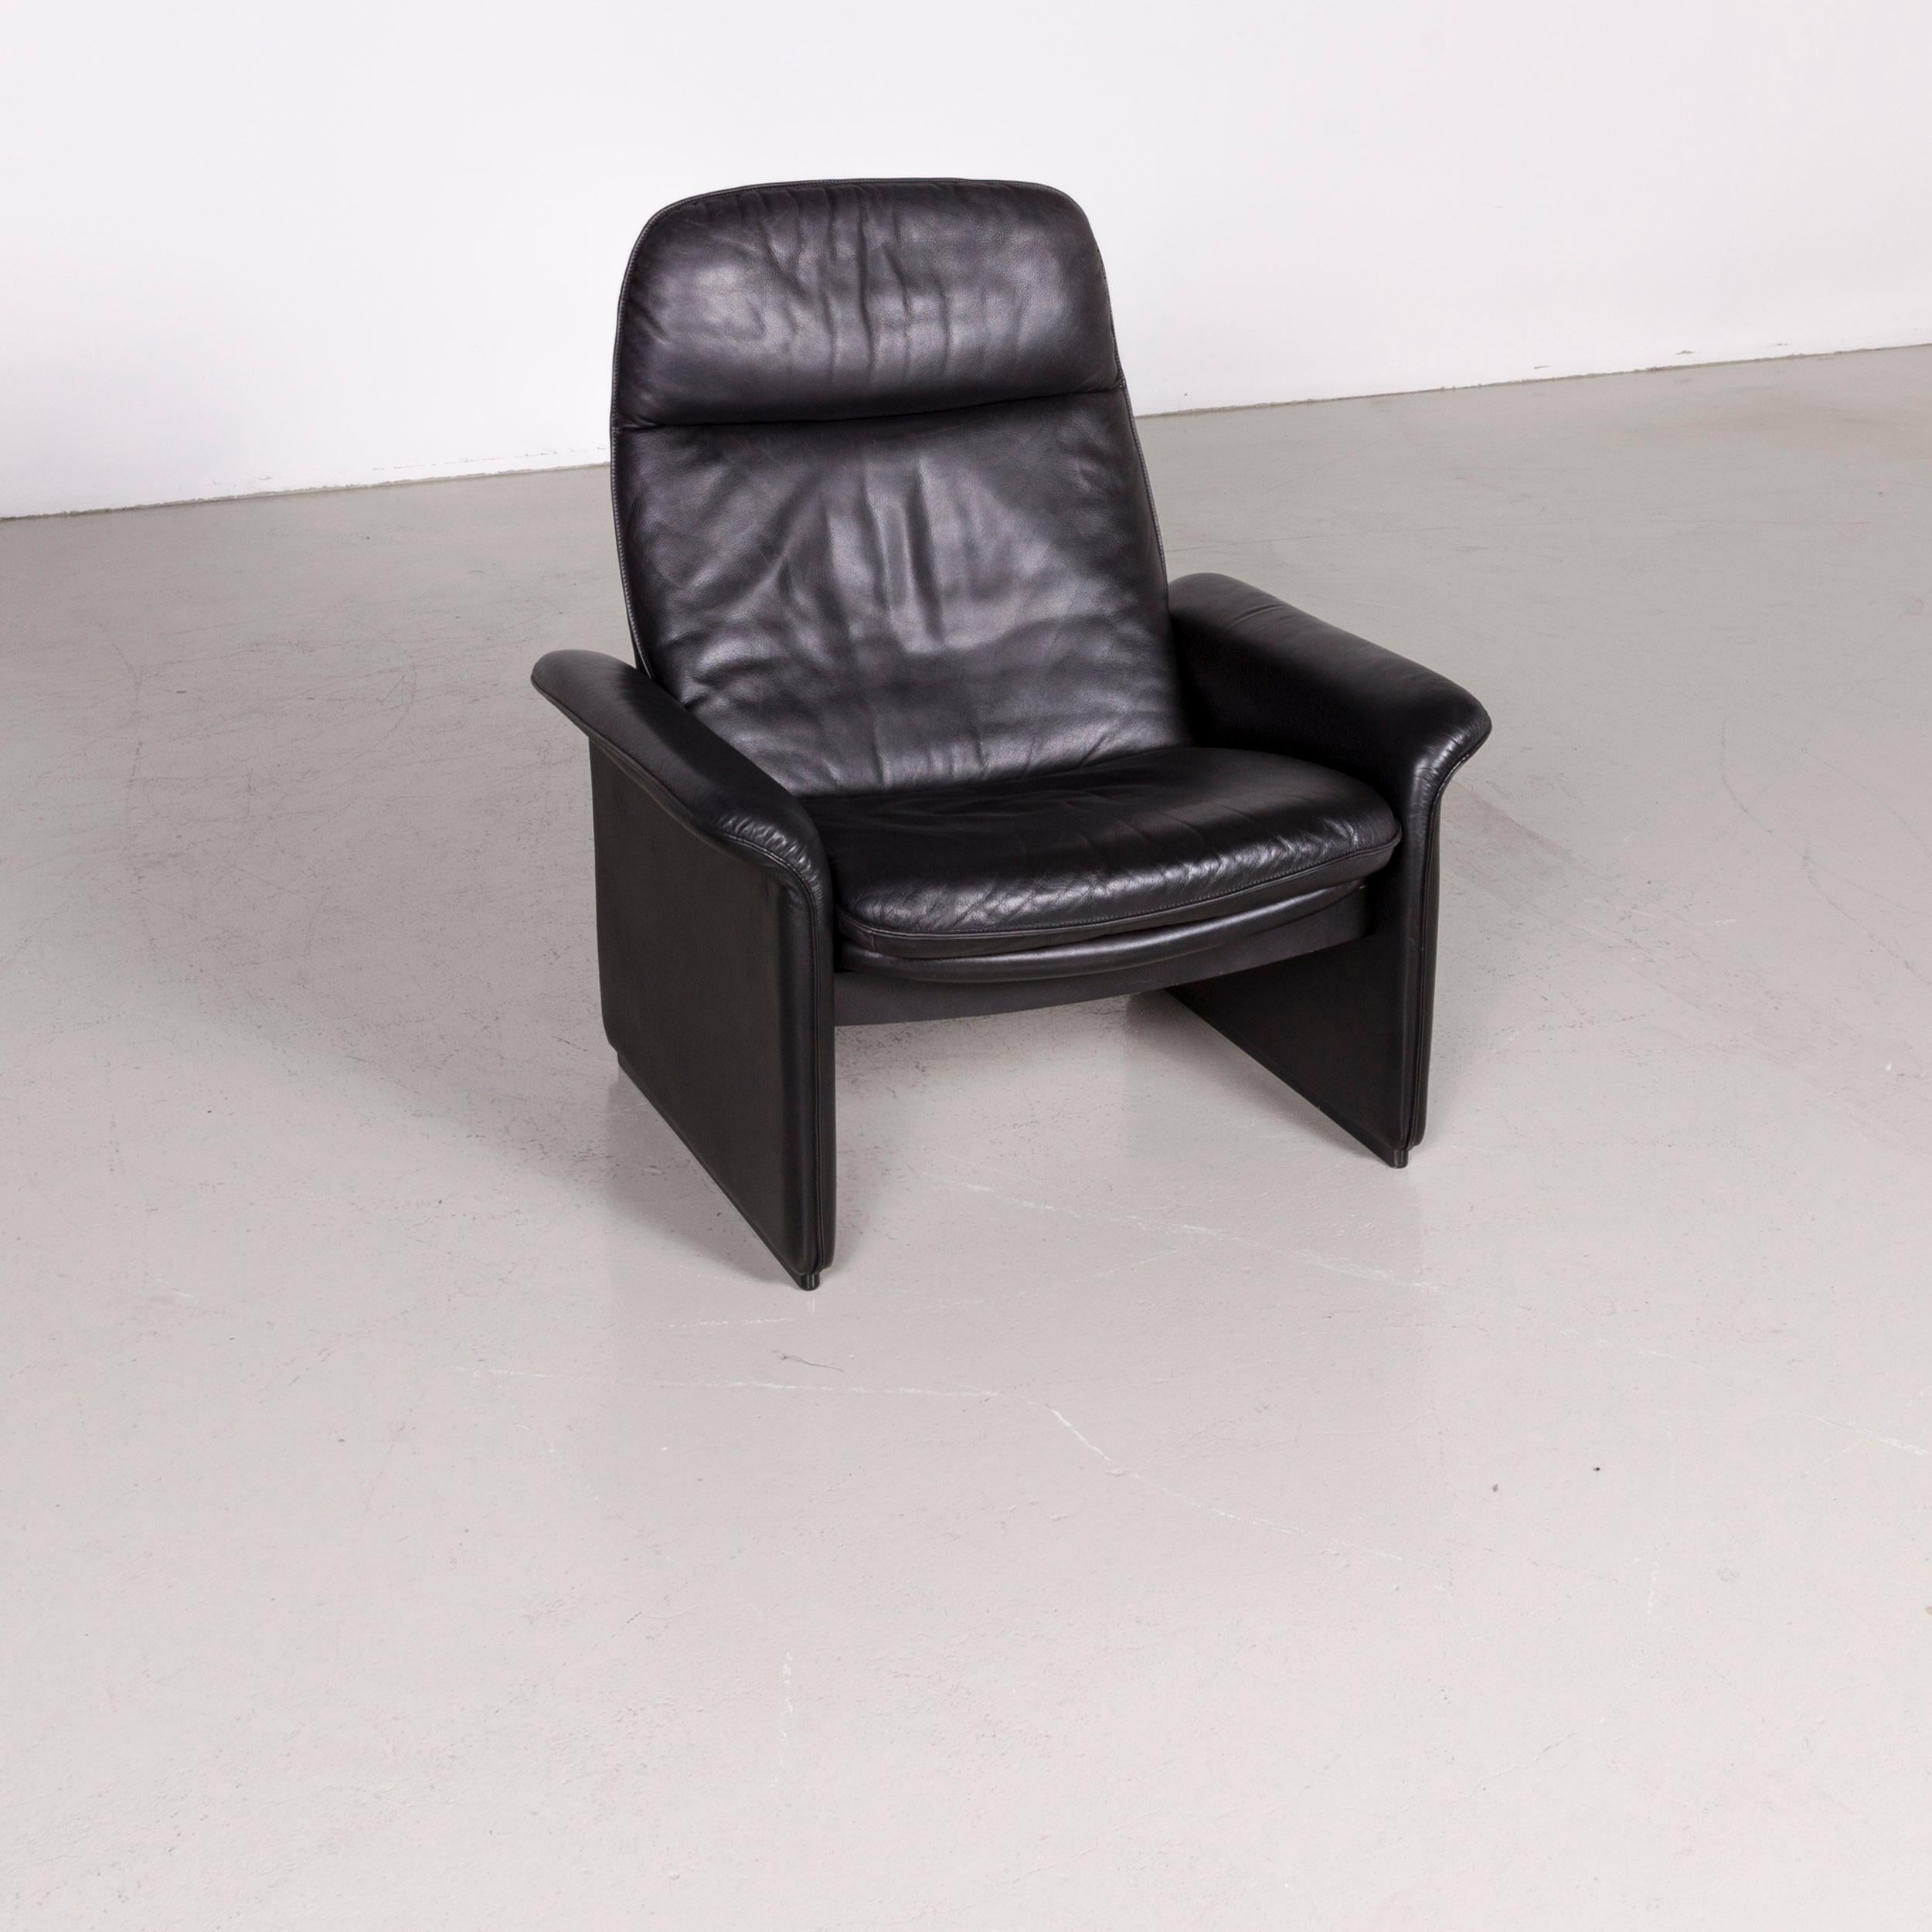 De Sede designer DS 50 leather relax armchair chair black modern.